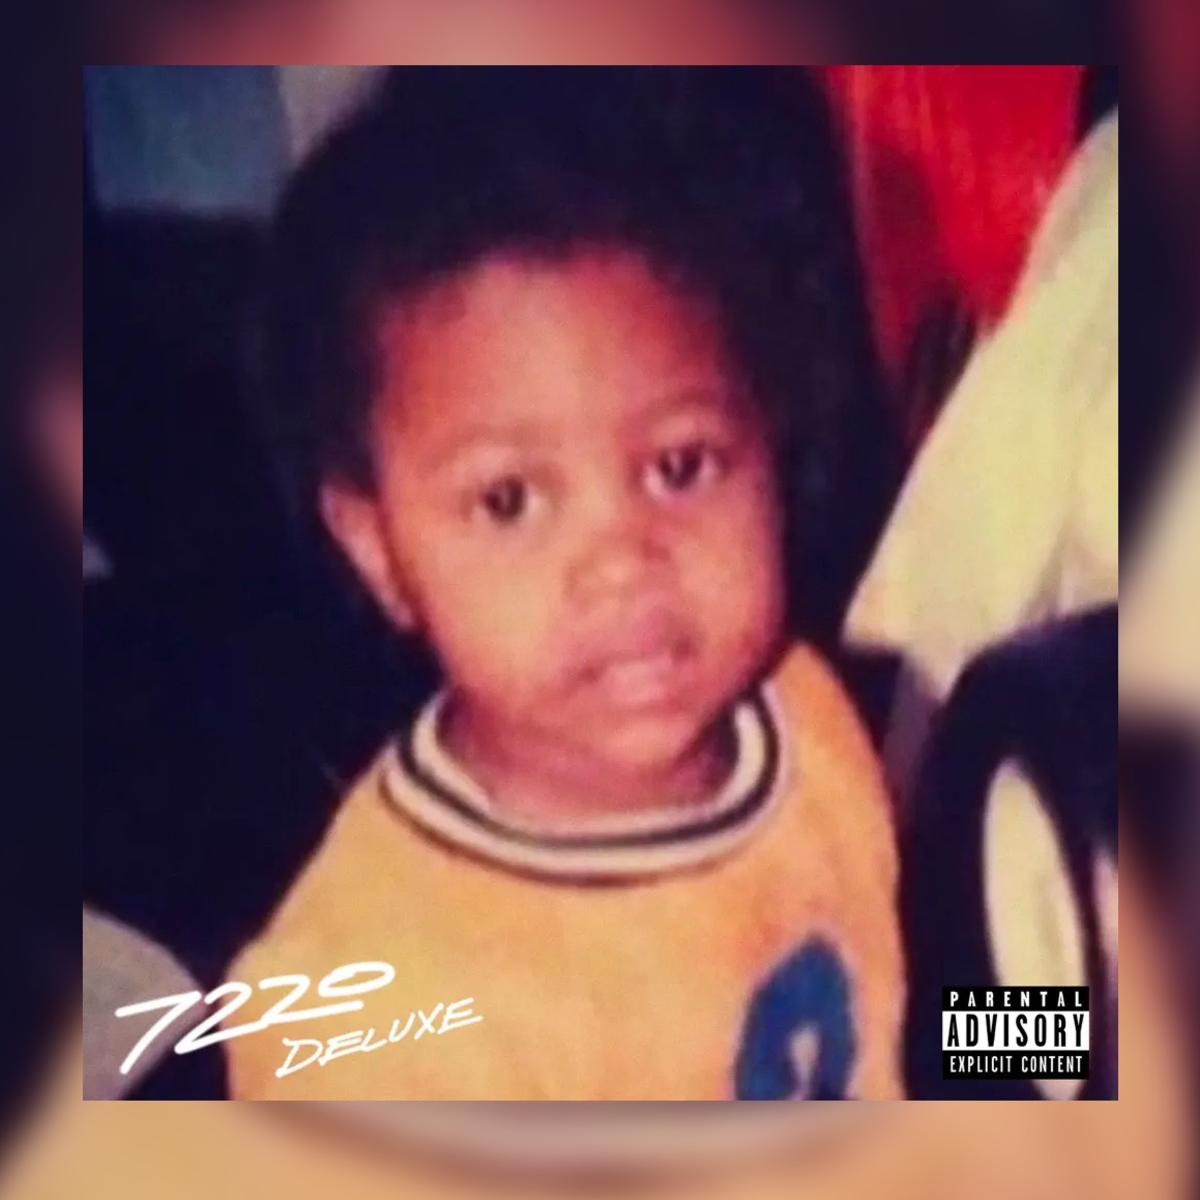 Lil Durk – 7220 (Deluxe) (Album Review)